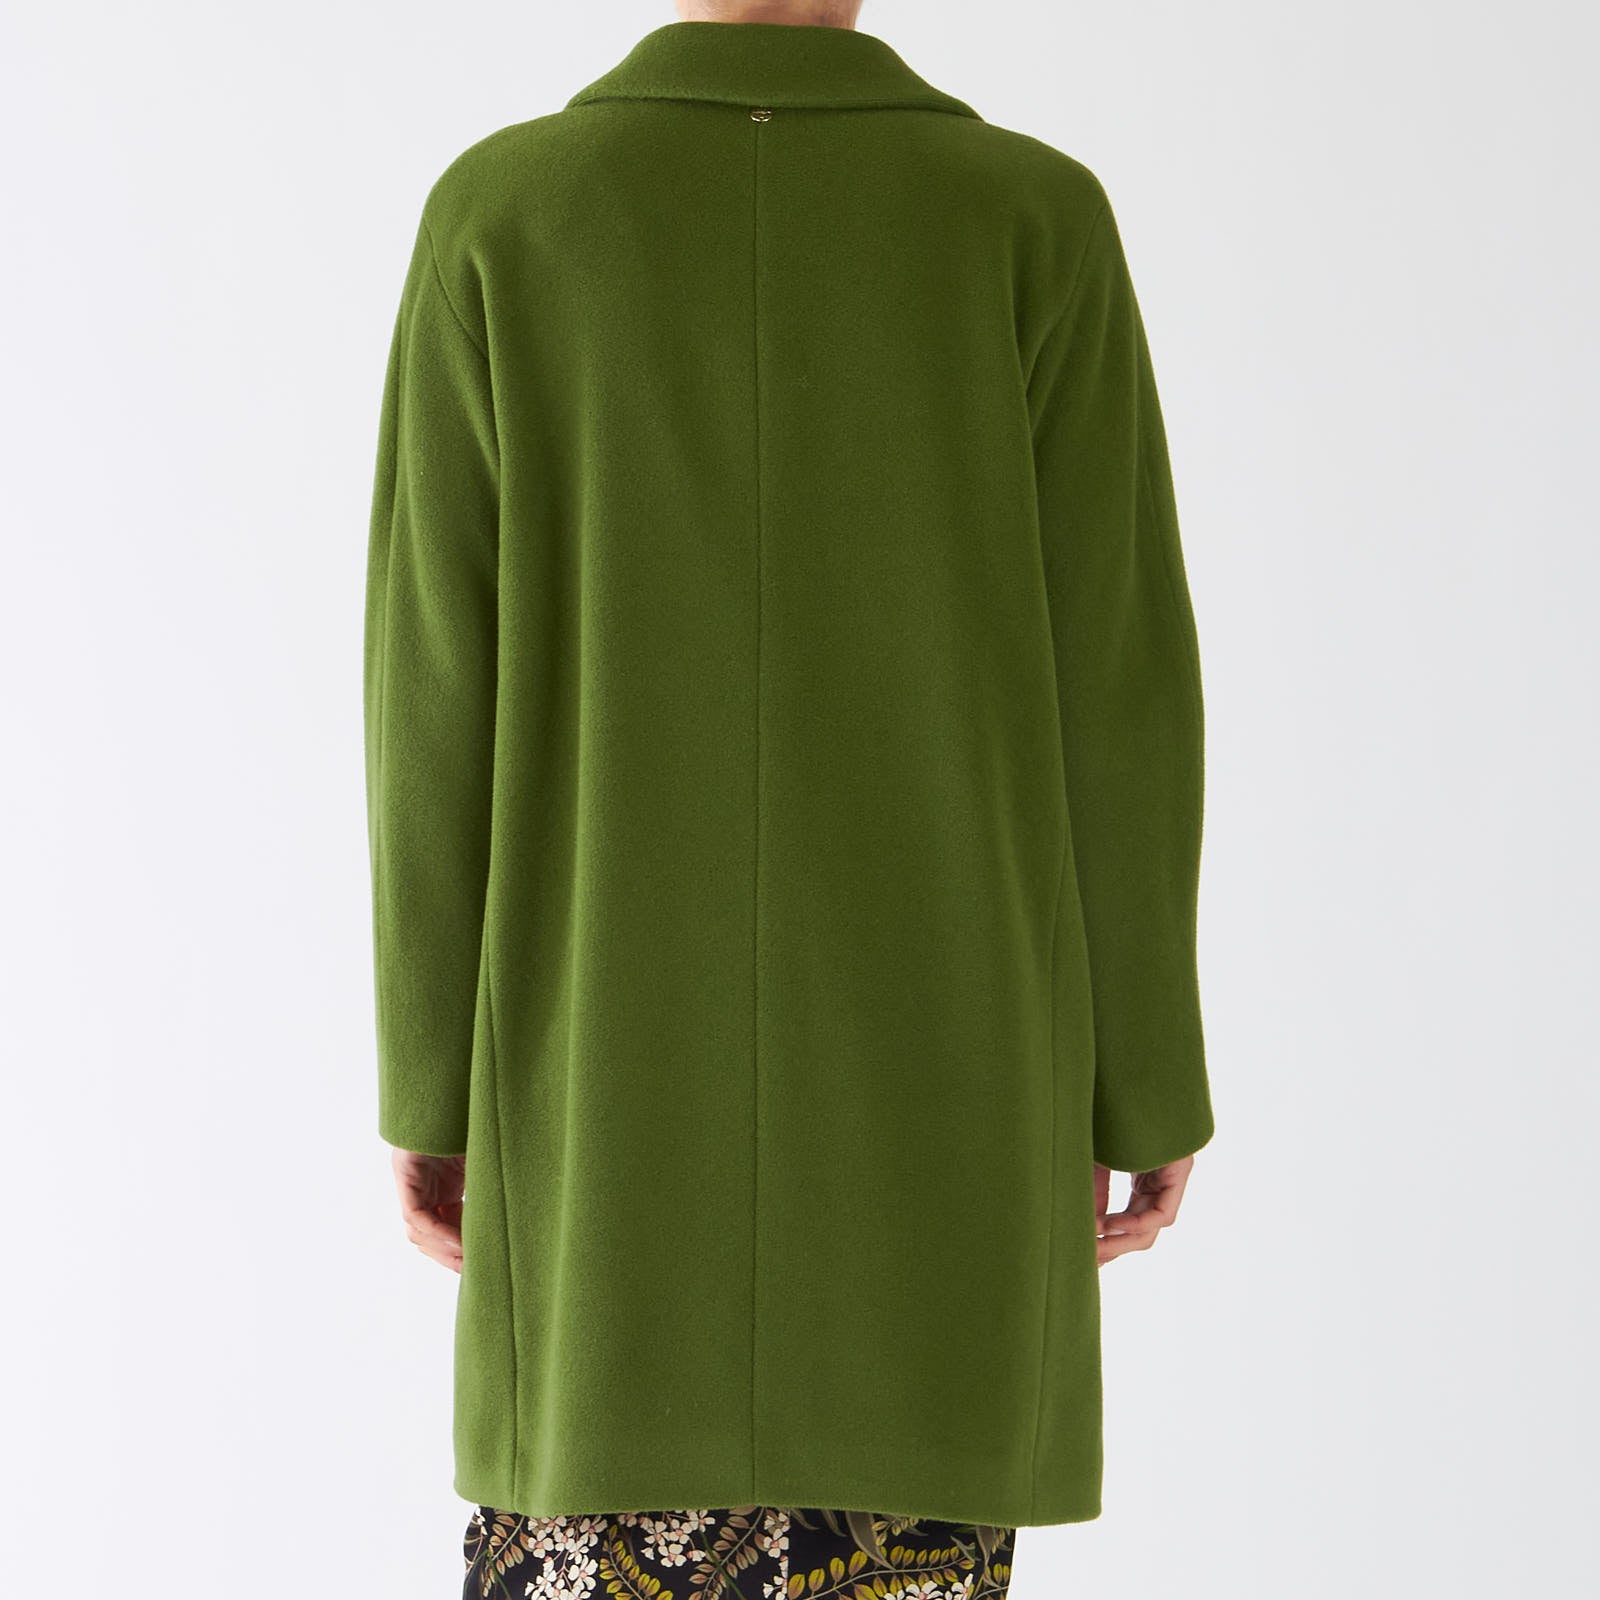 Orient Green Wool Blend Coat